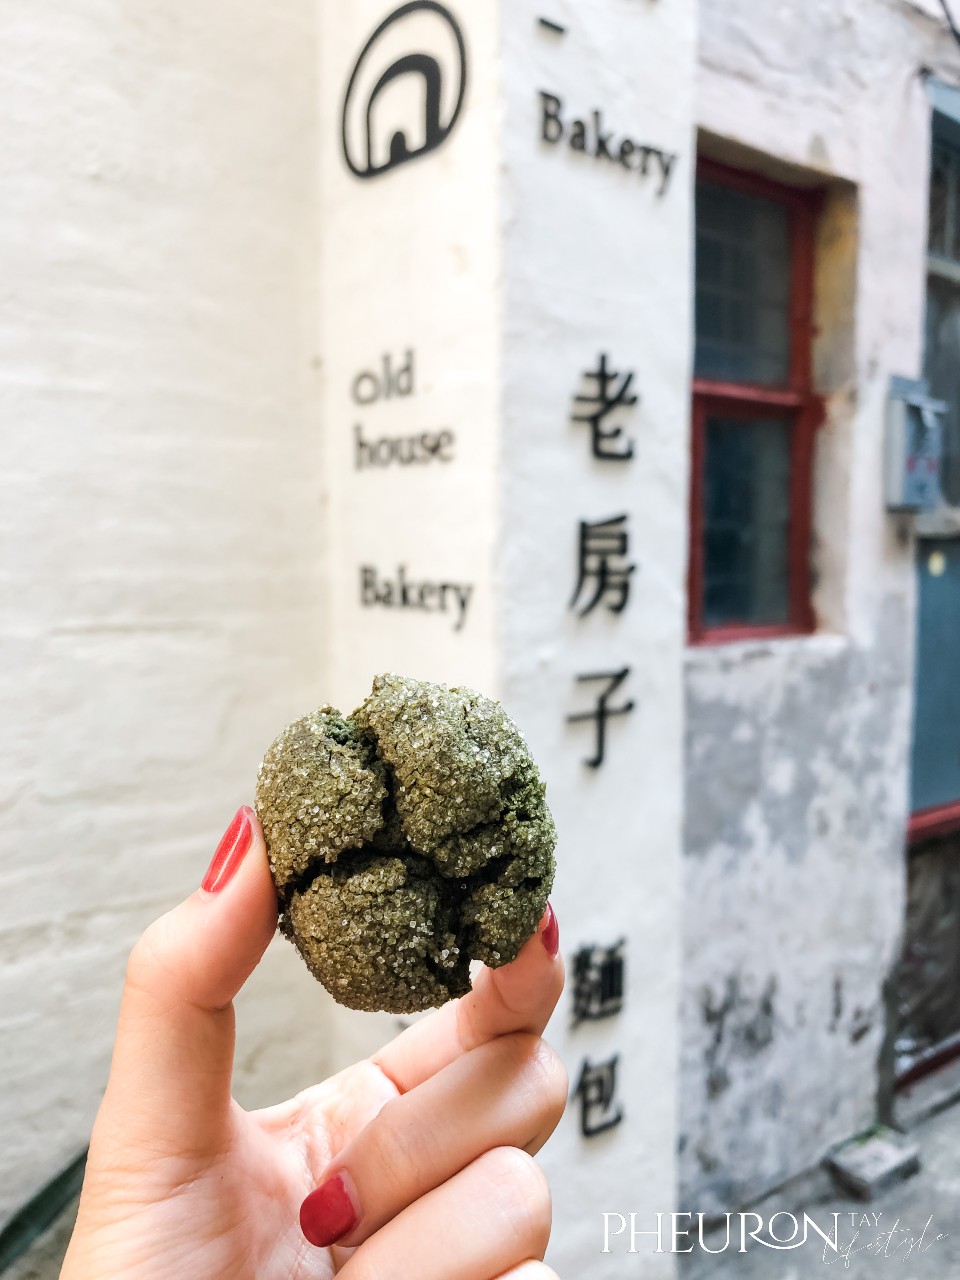 Old House Bakery Macau Matcha Cookie